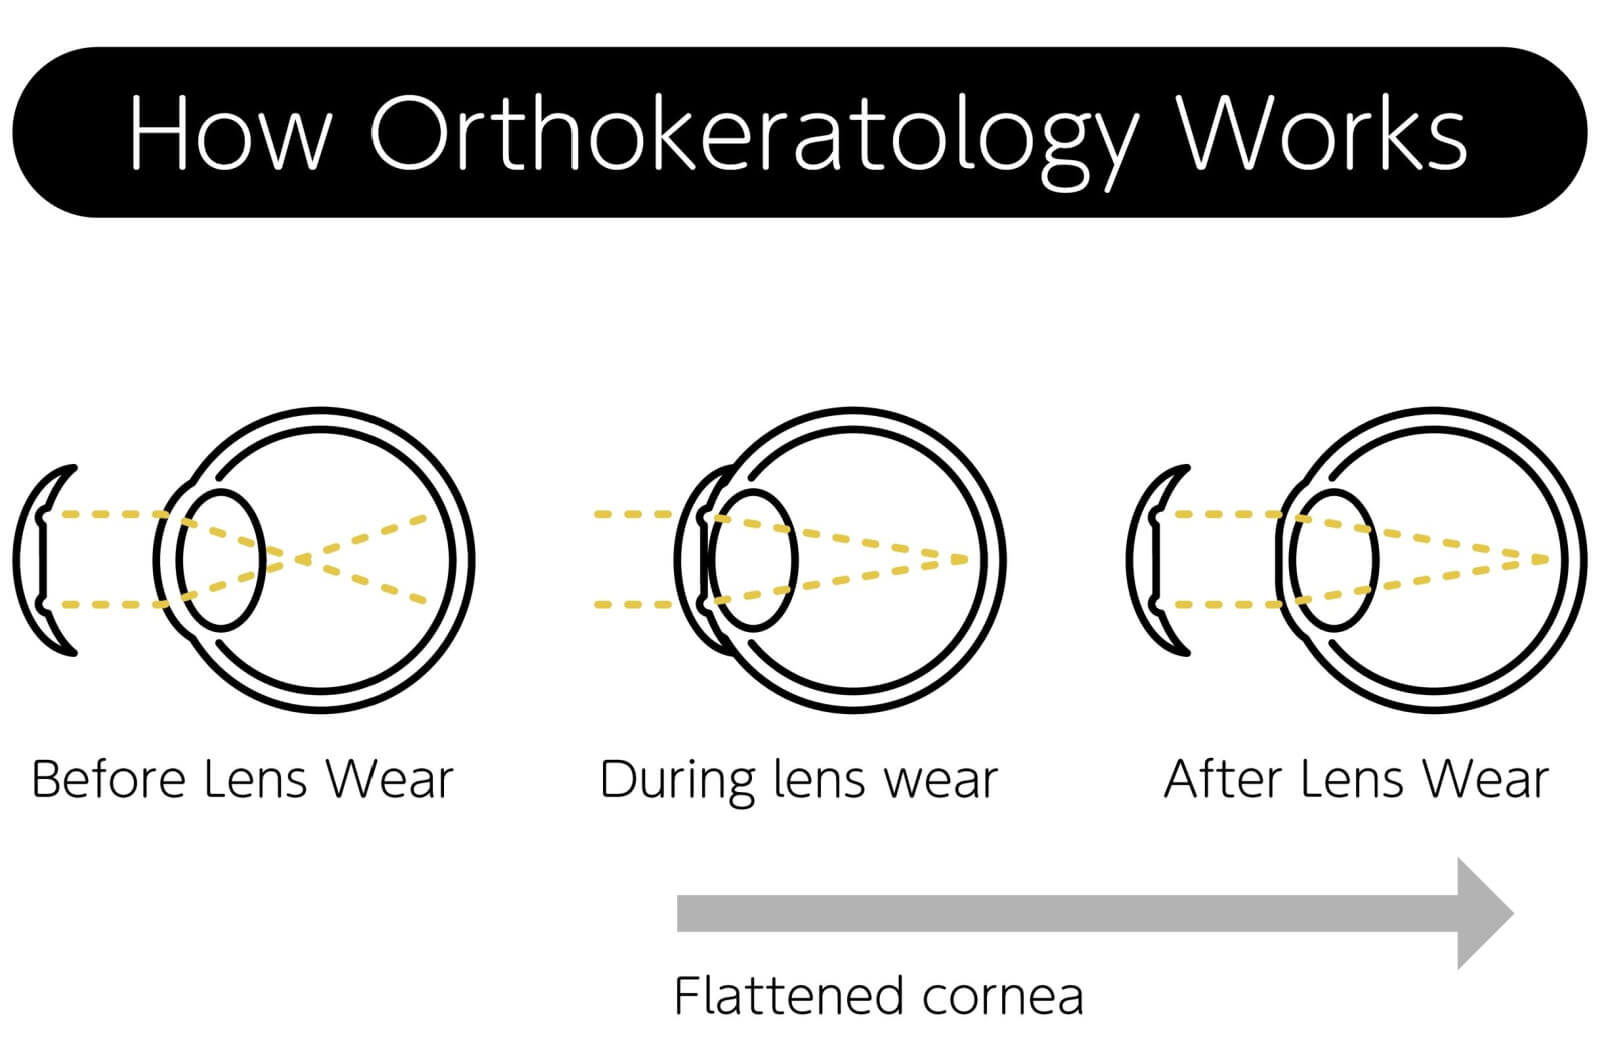 A diagram with eyeballs explains how orthokeratology works.